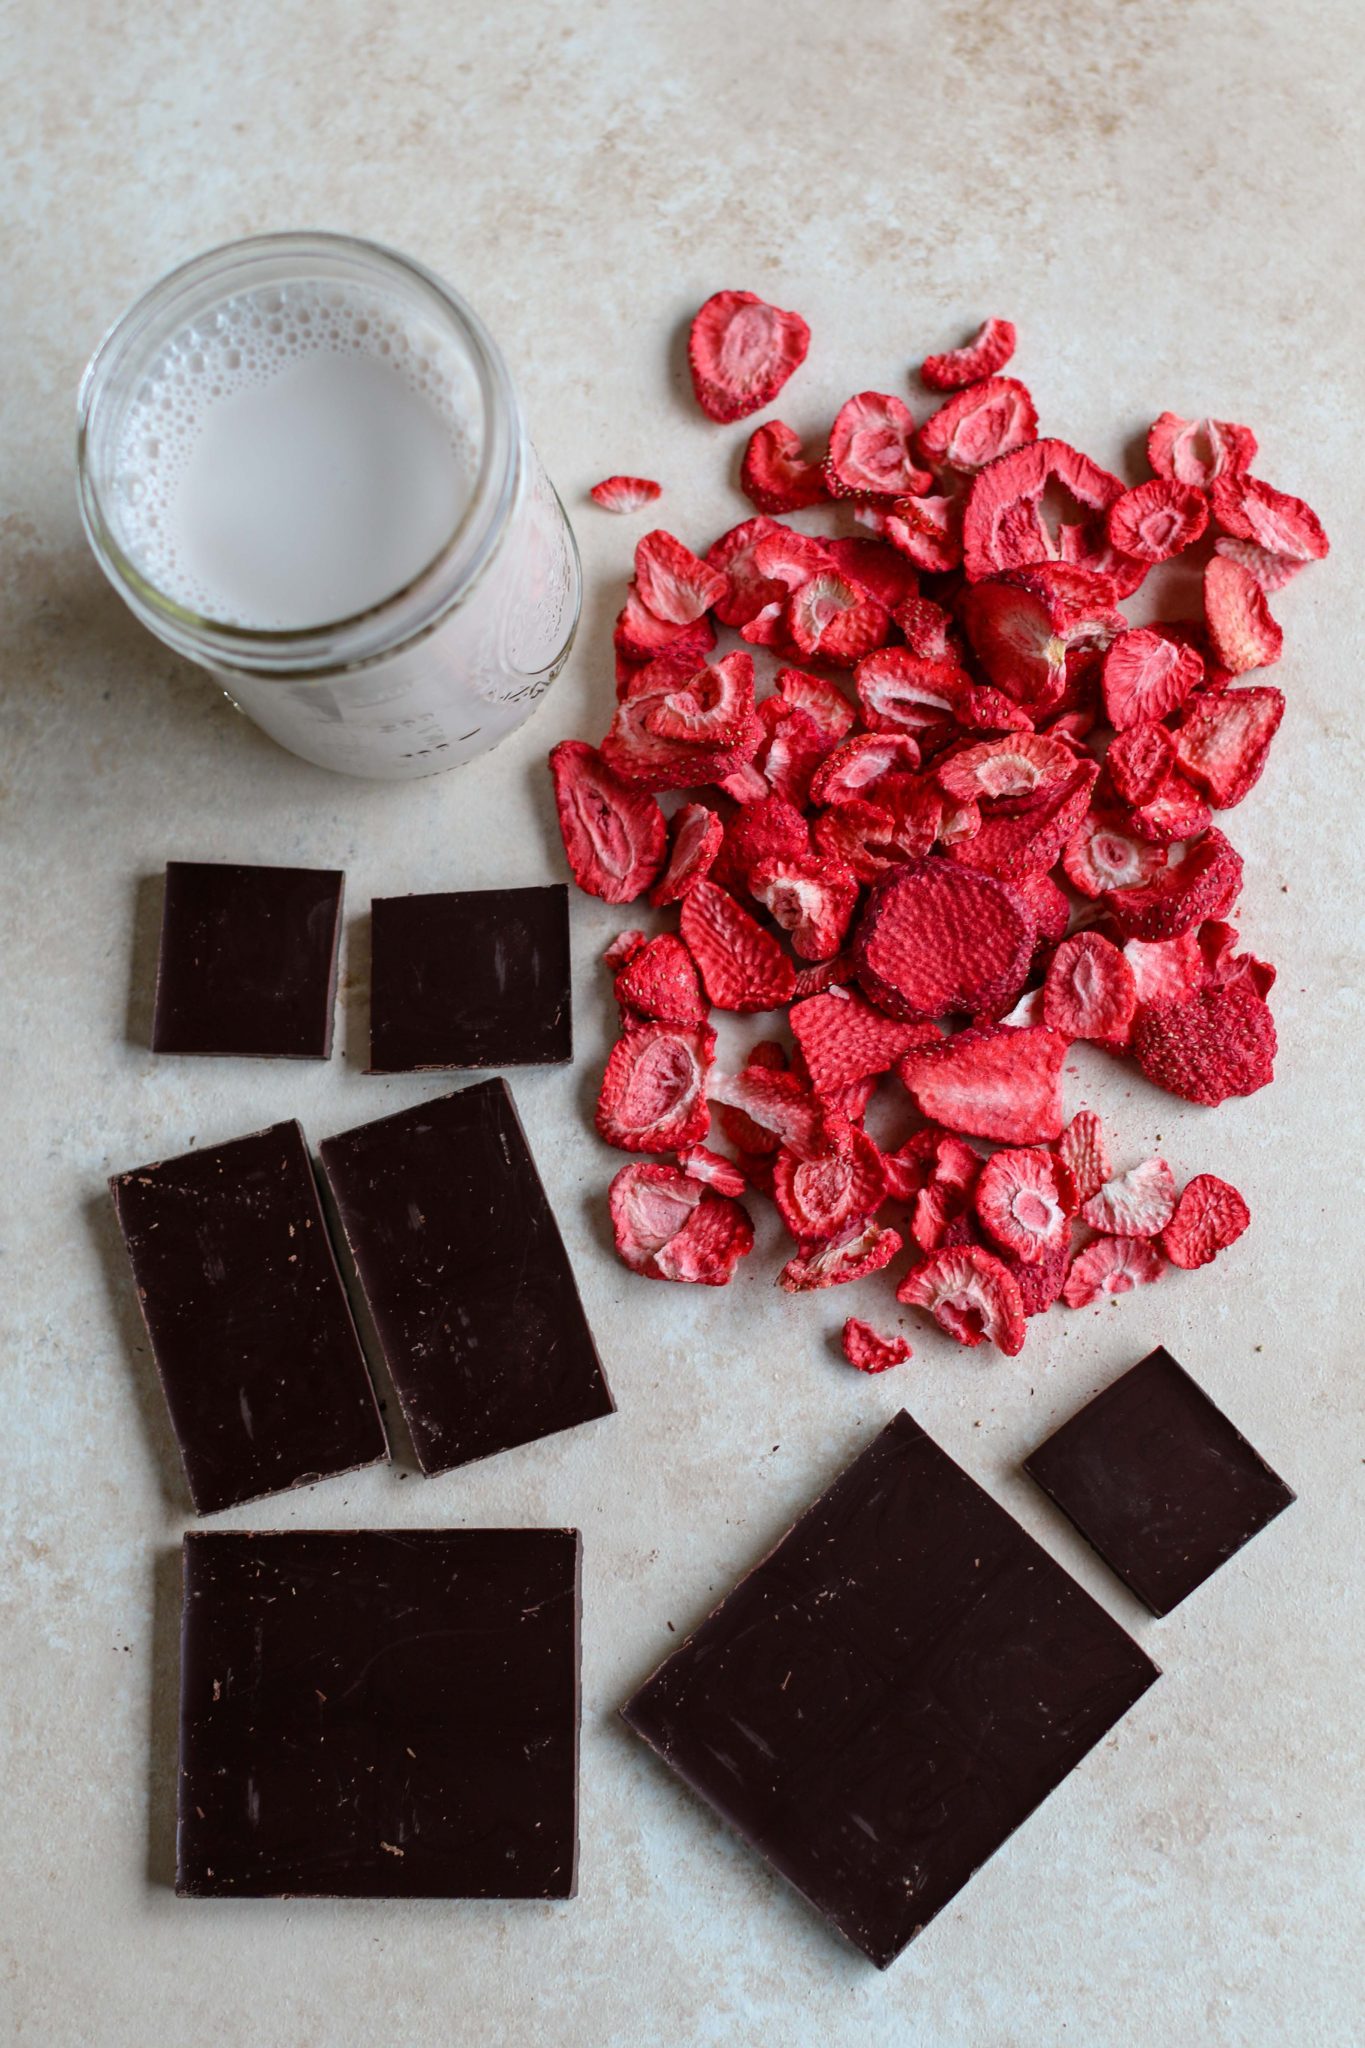 3-Ingredient Chocolate Strawberry Truffle Ingredients